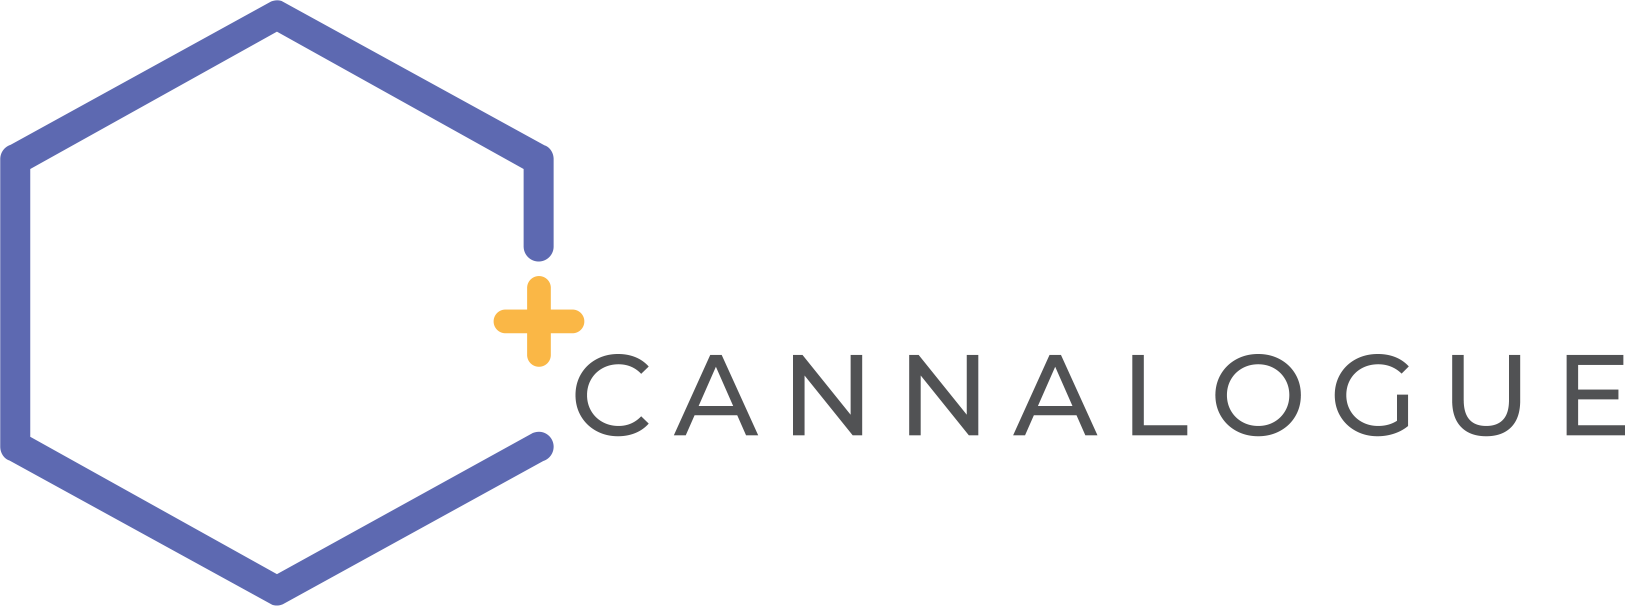 Cannalogue Logo Colour (1).png